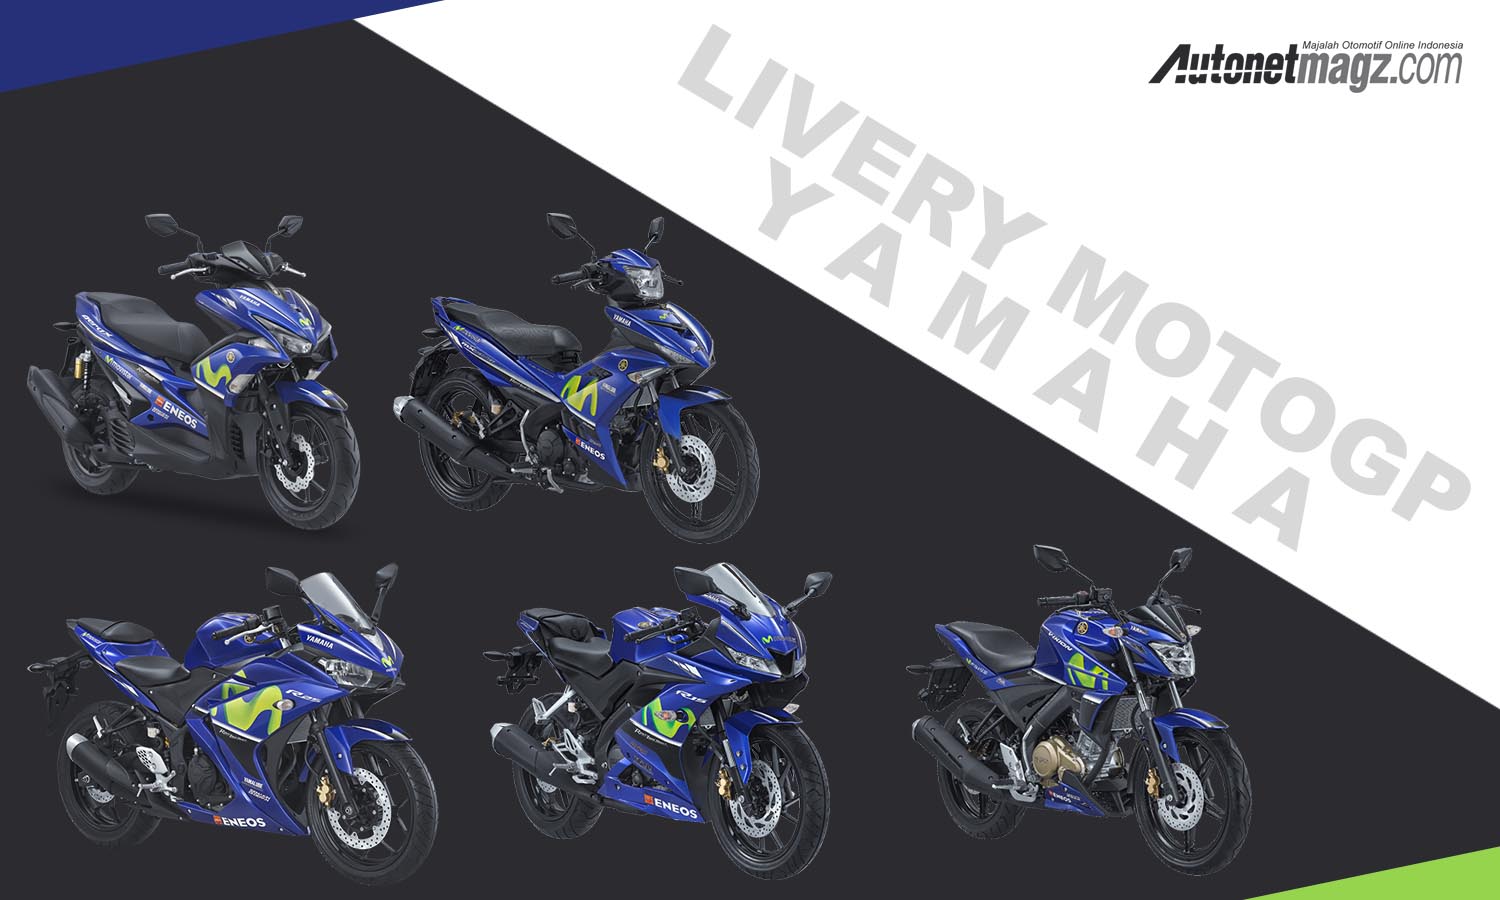 Berita, livery motogp: Yamaha Merilis Livery MotoGP Terbaru Pada Lima Produknya